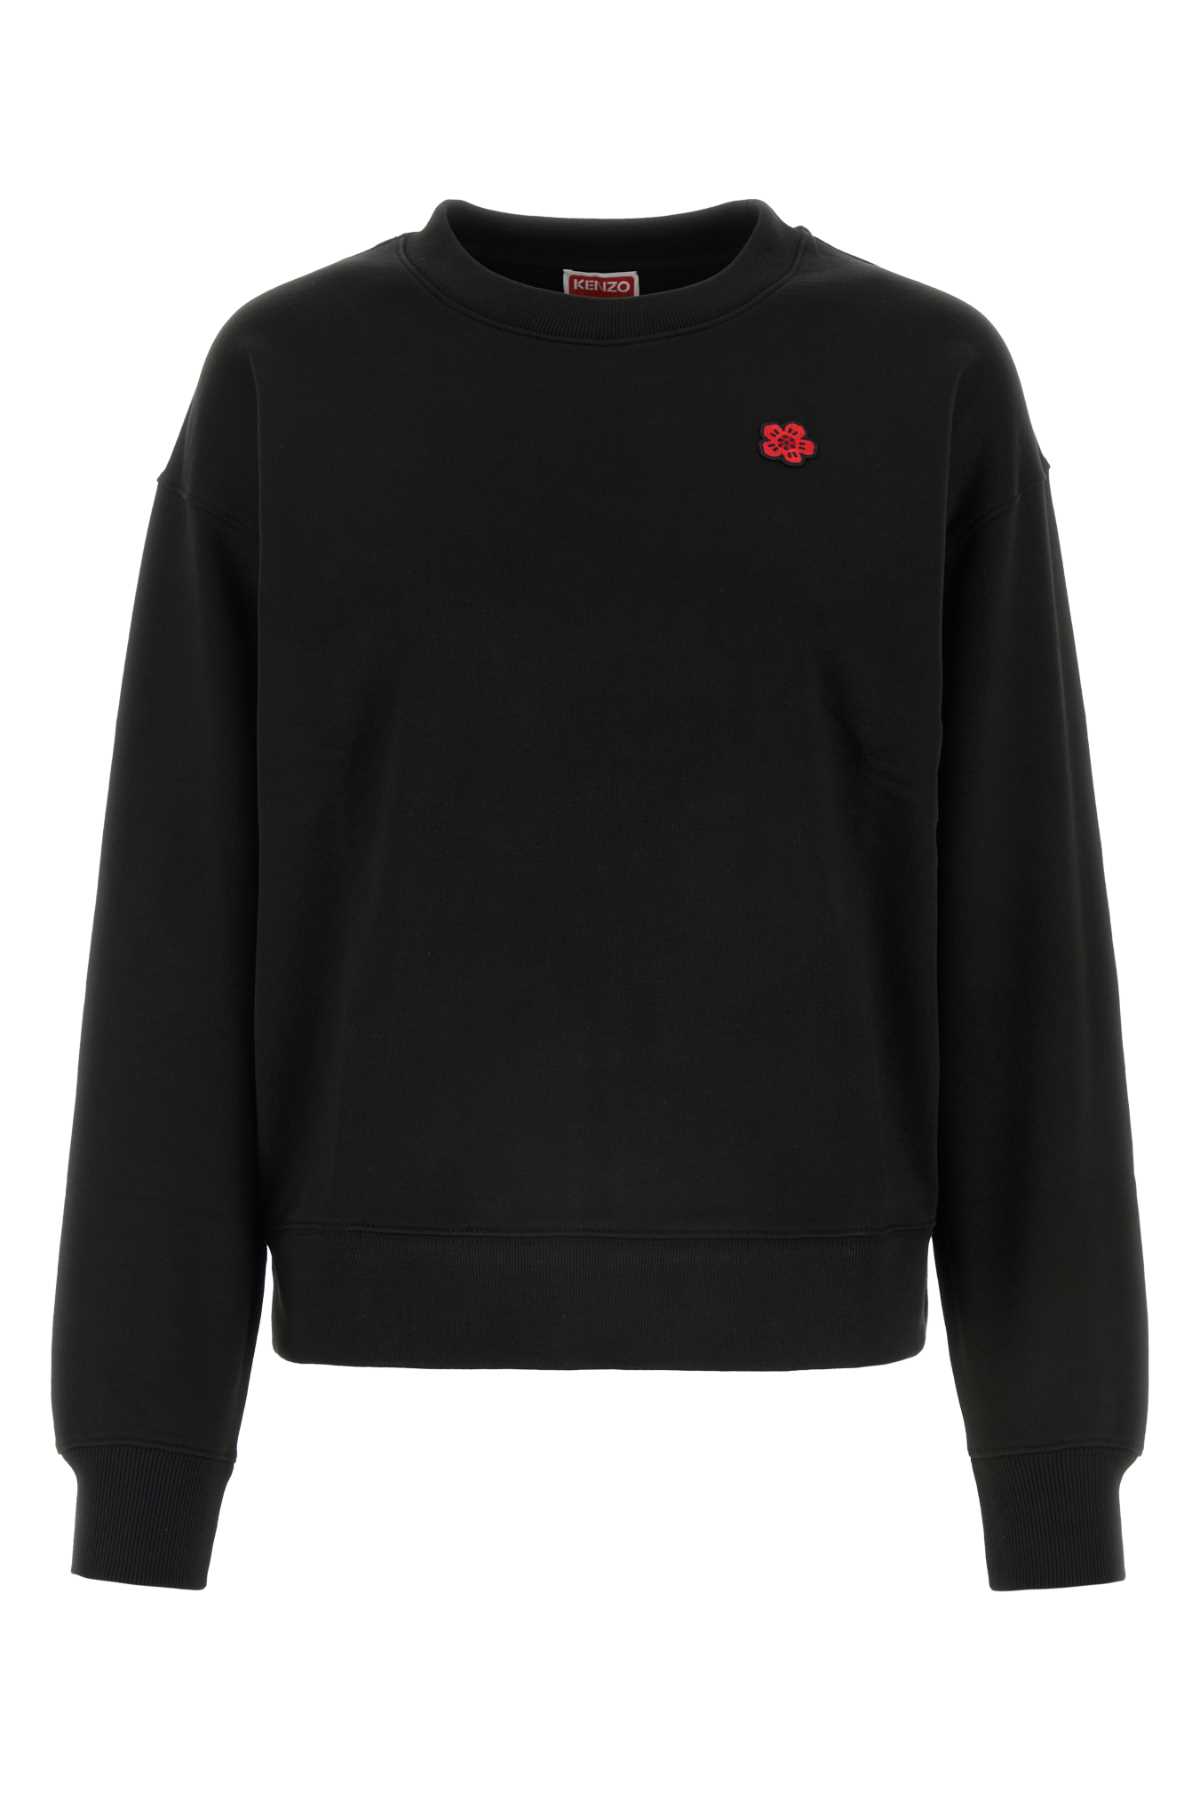 Kenzo Black Cotton Sweatshirt